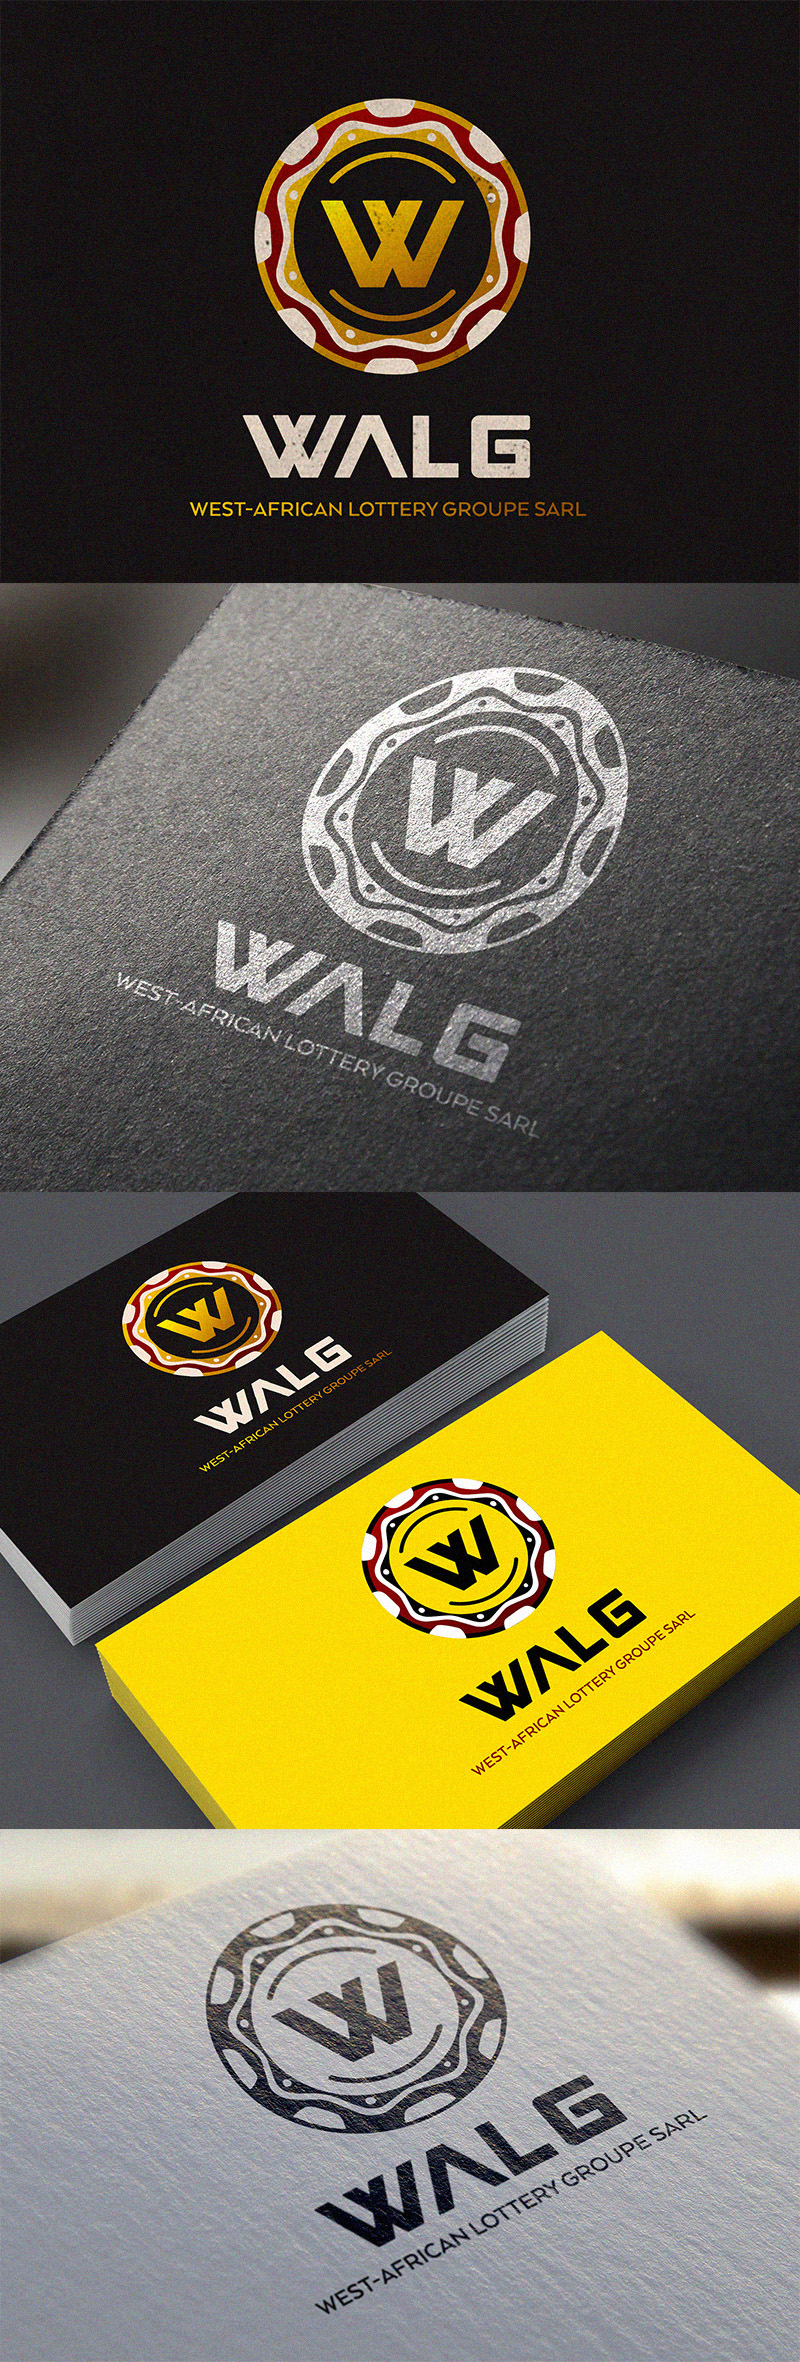 WALG logo on materials